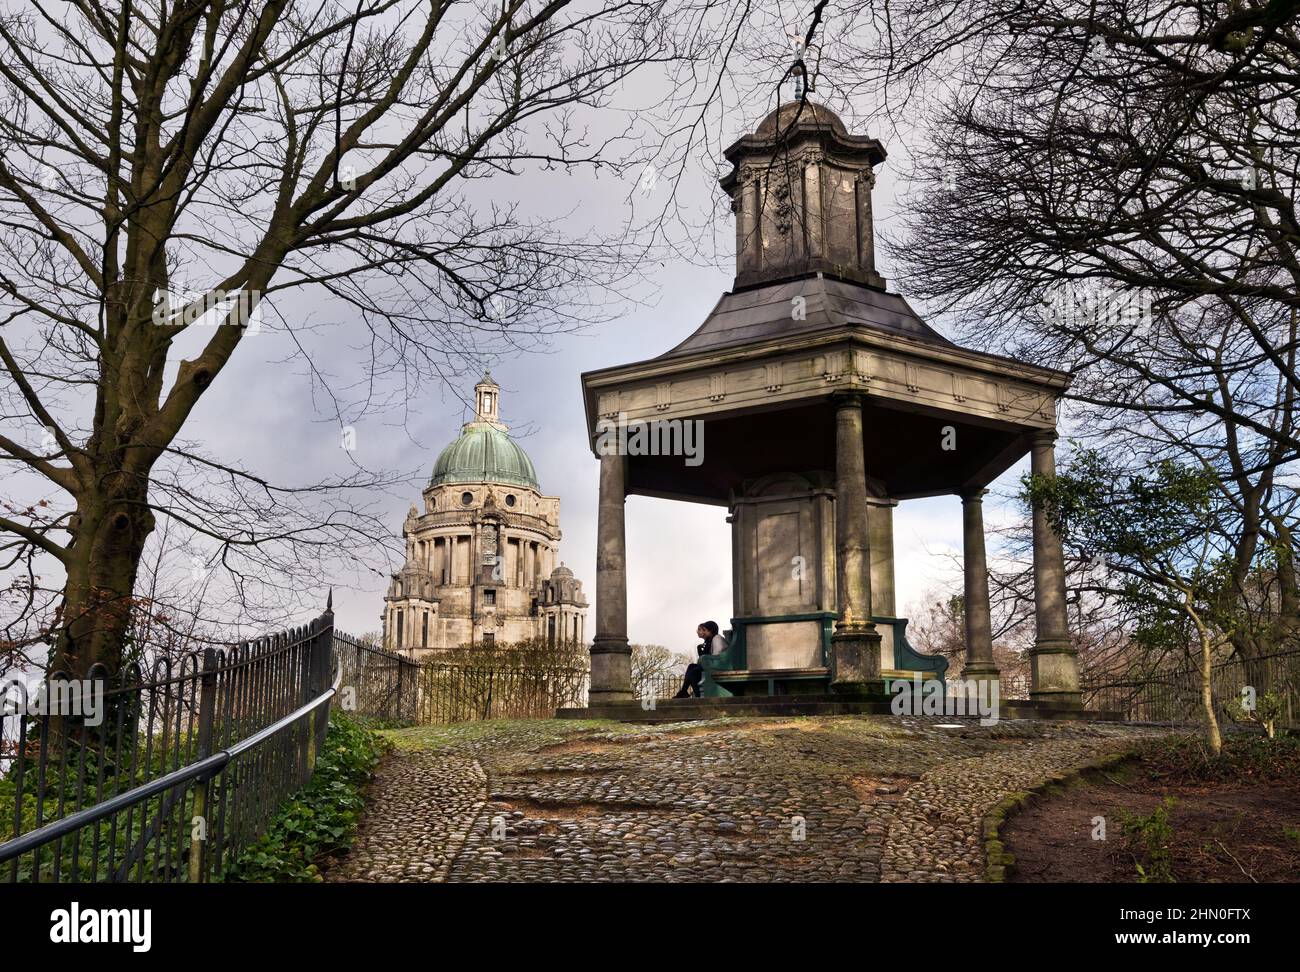 El monumento a Ashton visto desde el refugio Temple, Williamson Park, Lancaster. Foto de stock